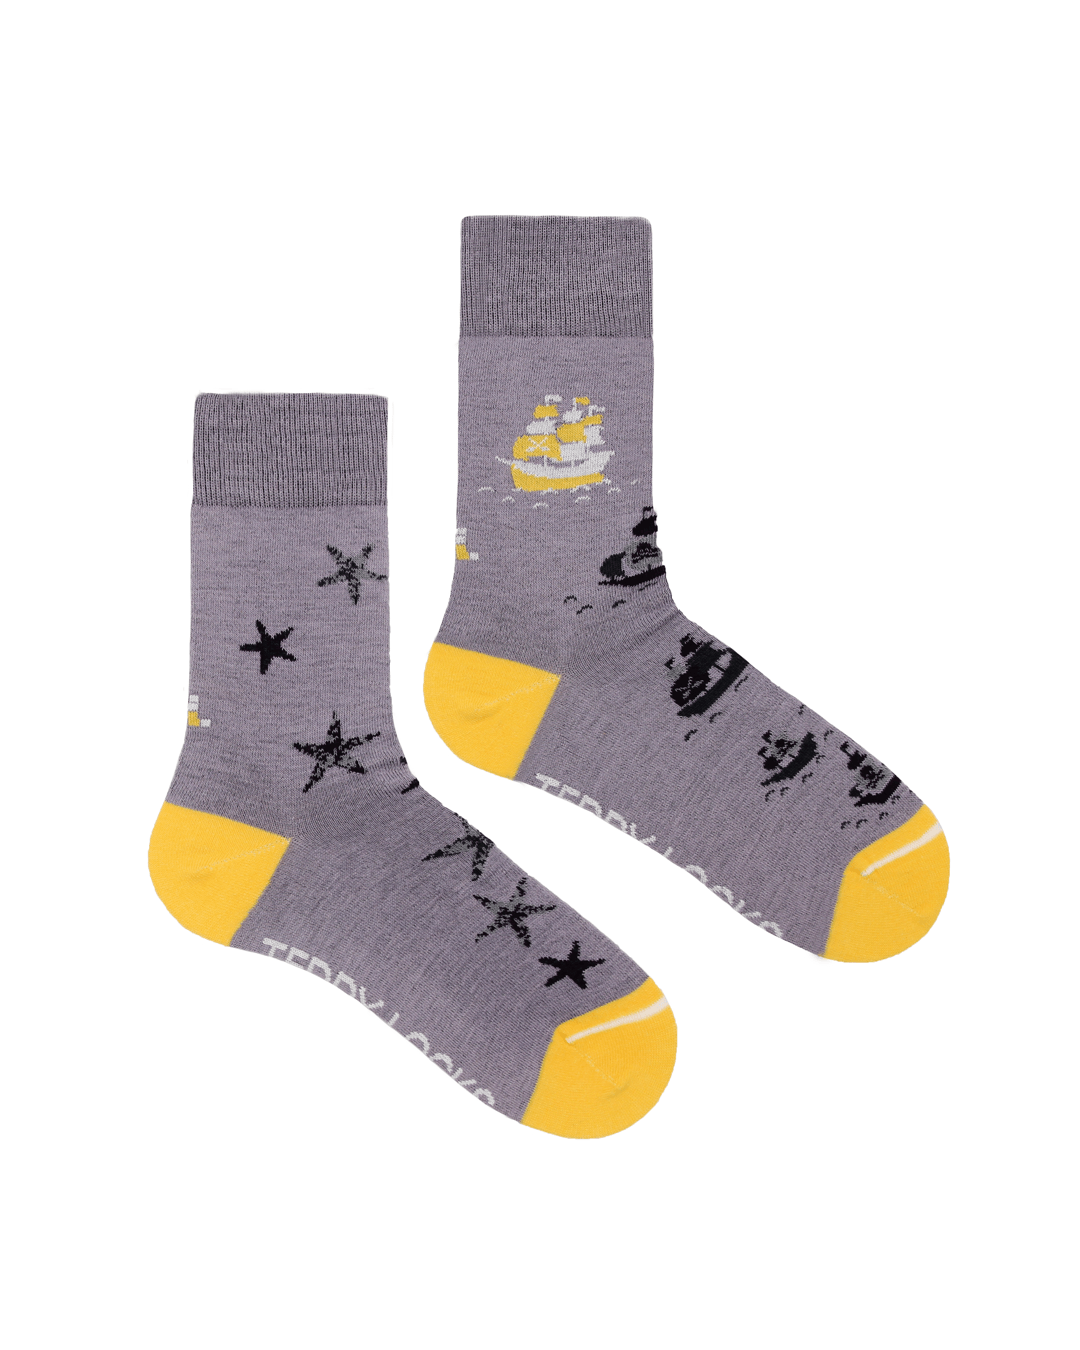 Starfish socks. Fun sustainable socks designed in the UK